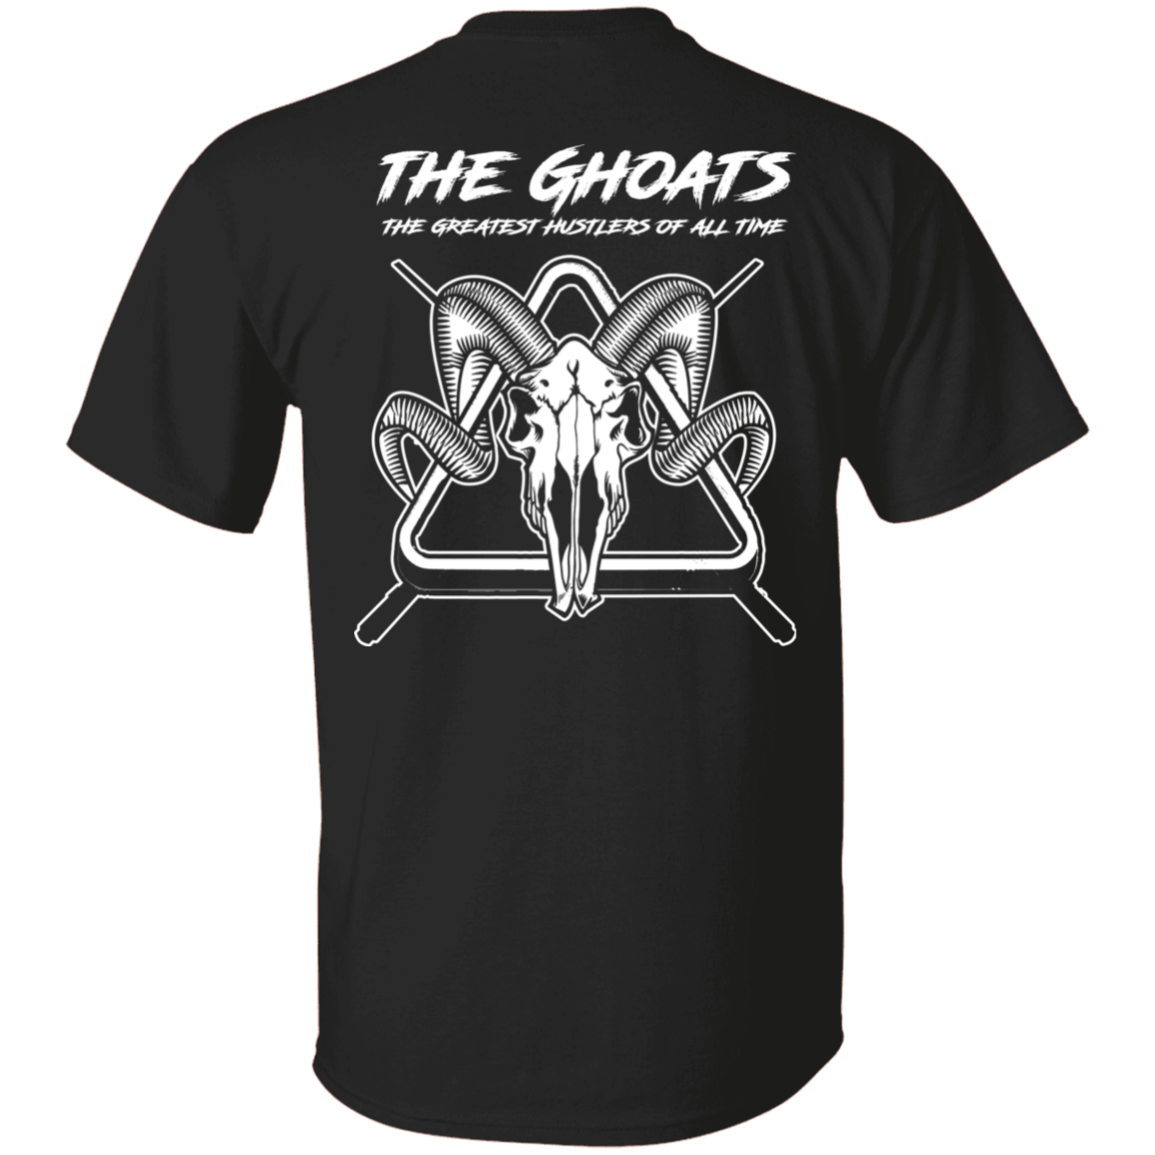 The GHOATS Custom Design #28. Shoot Pool. Basic 100% Cotton T-Shirt